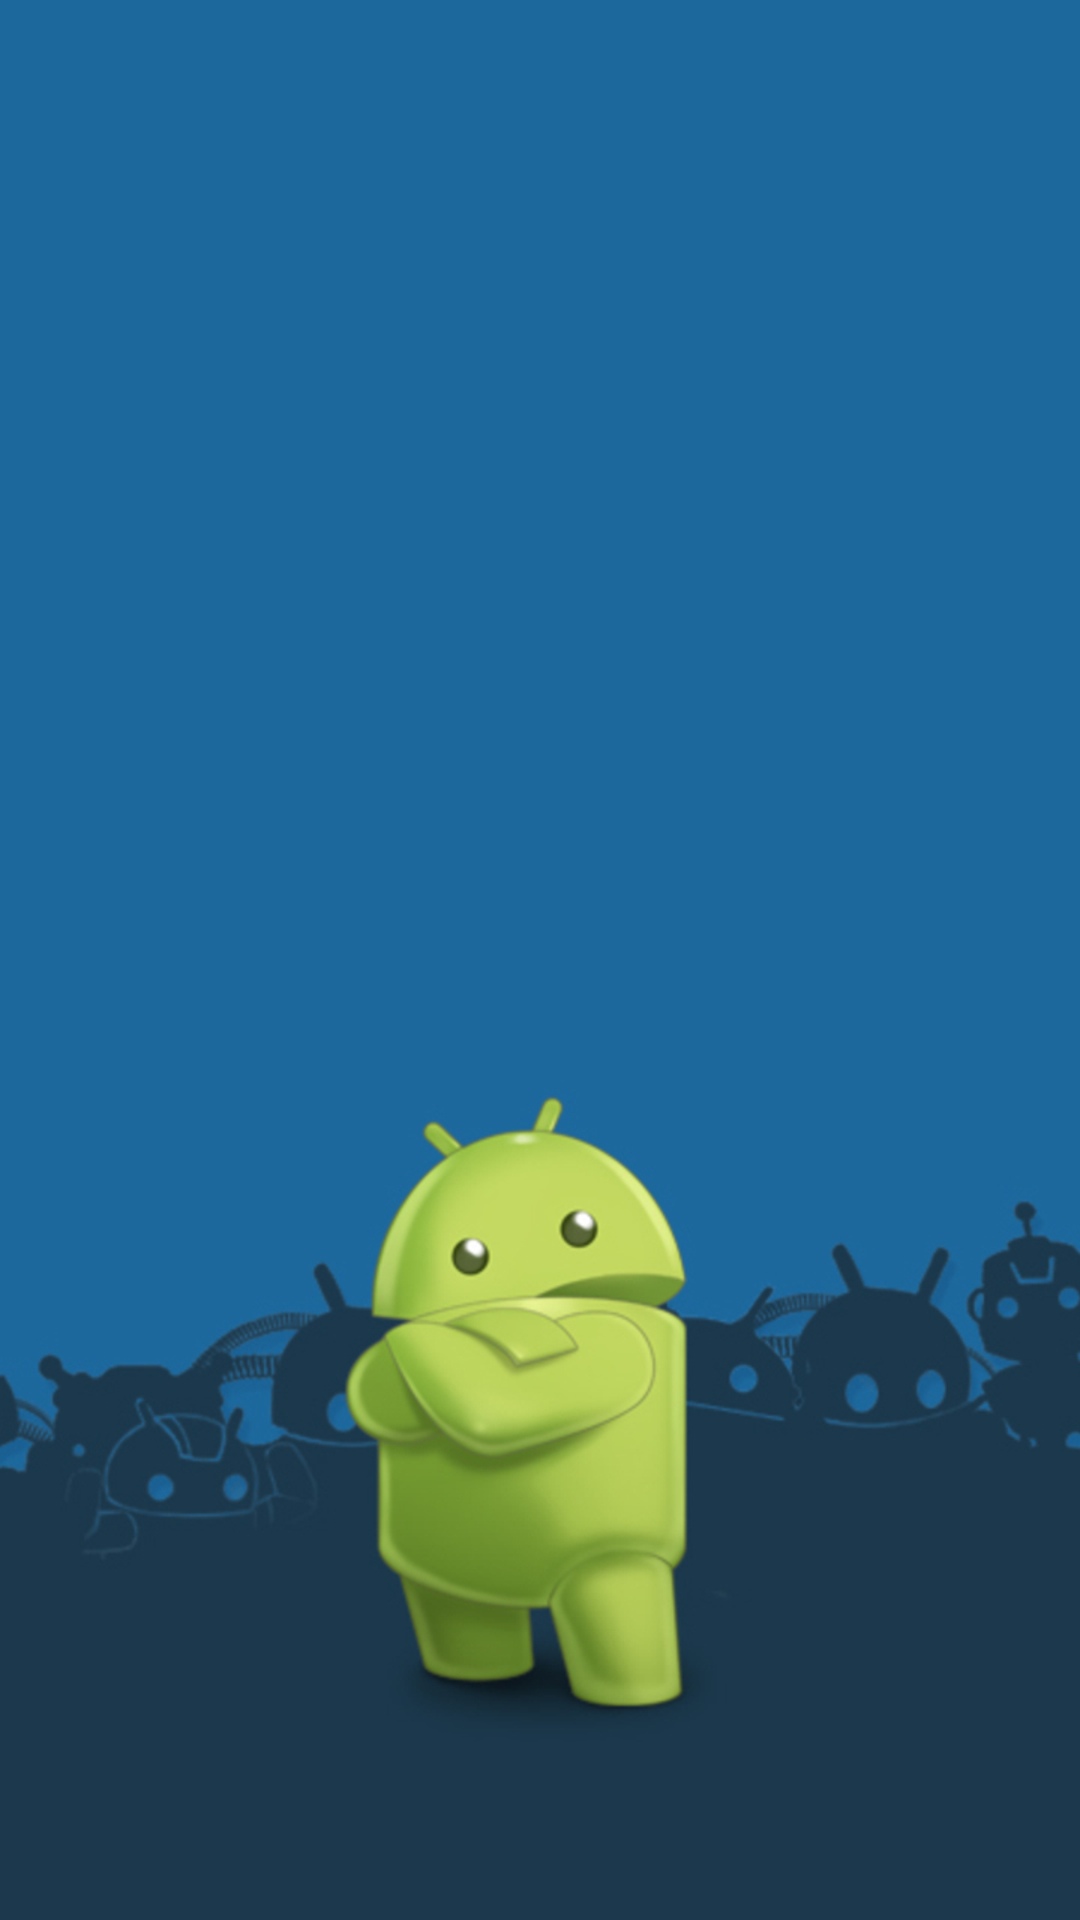 hintergrundbilder für android smartphone,blau,grün,karikatur,gelb,illustration